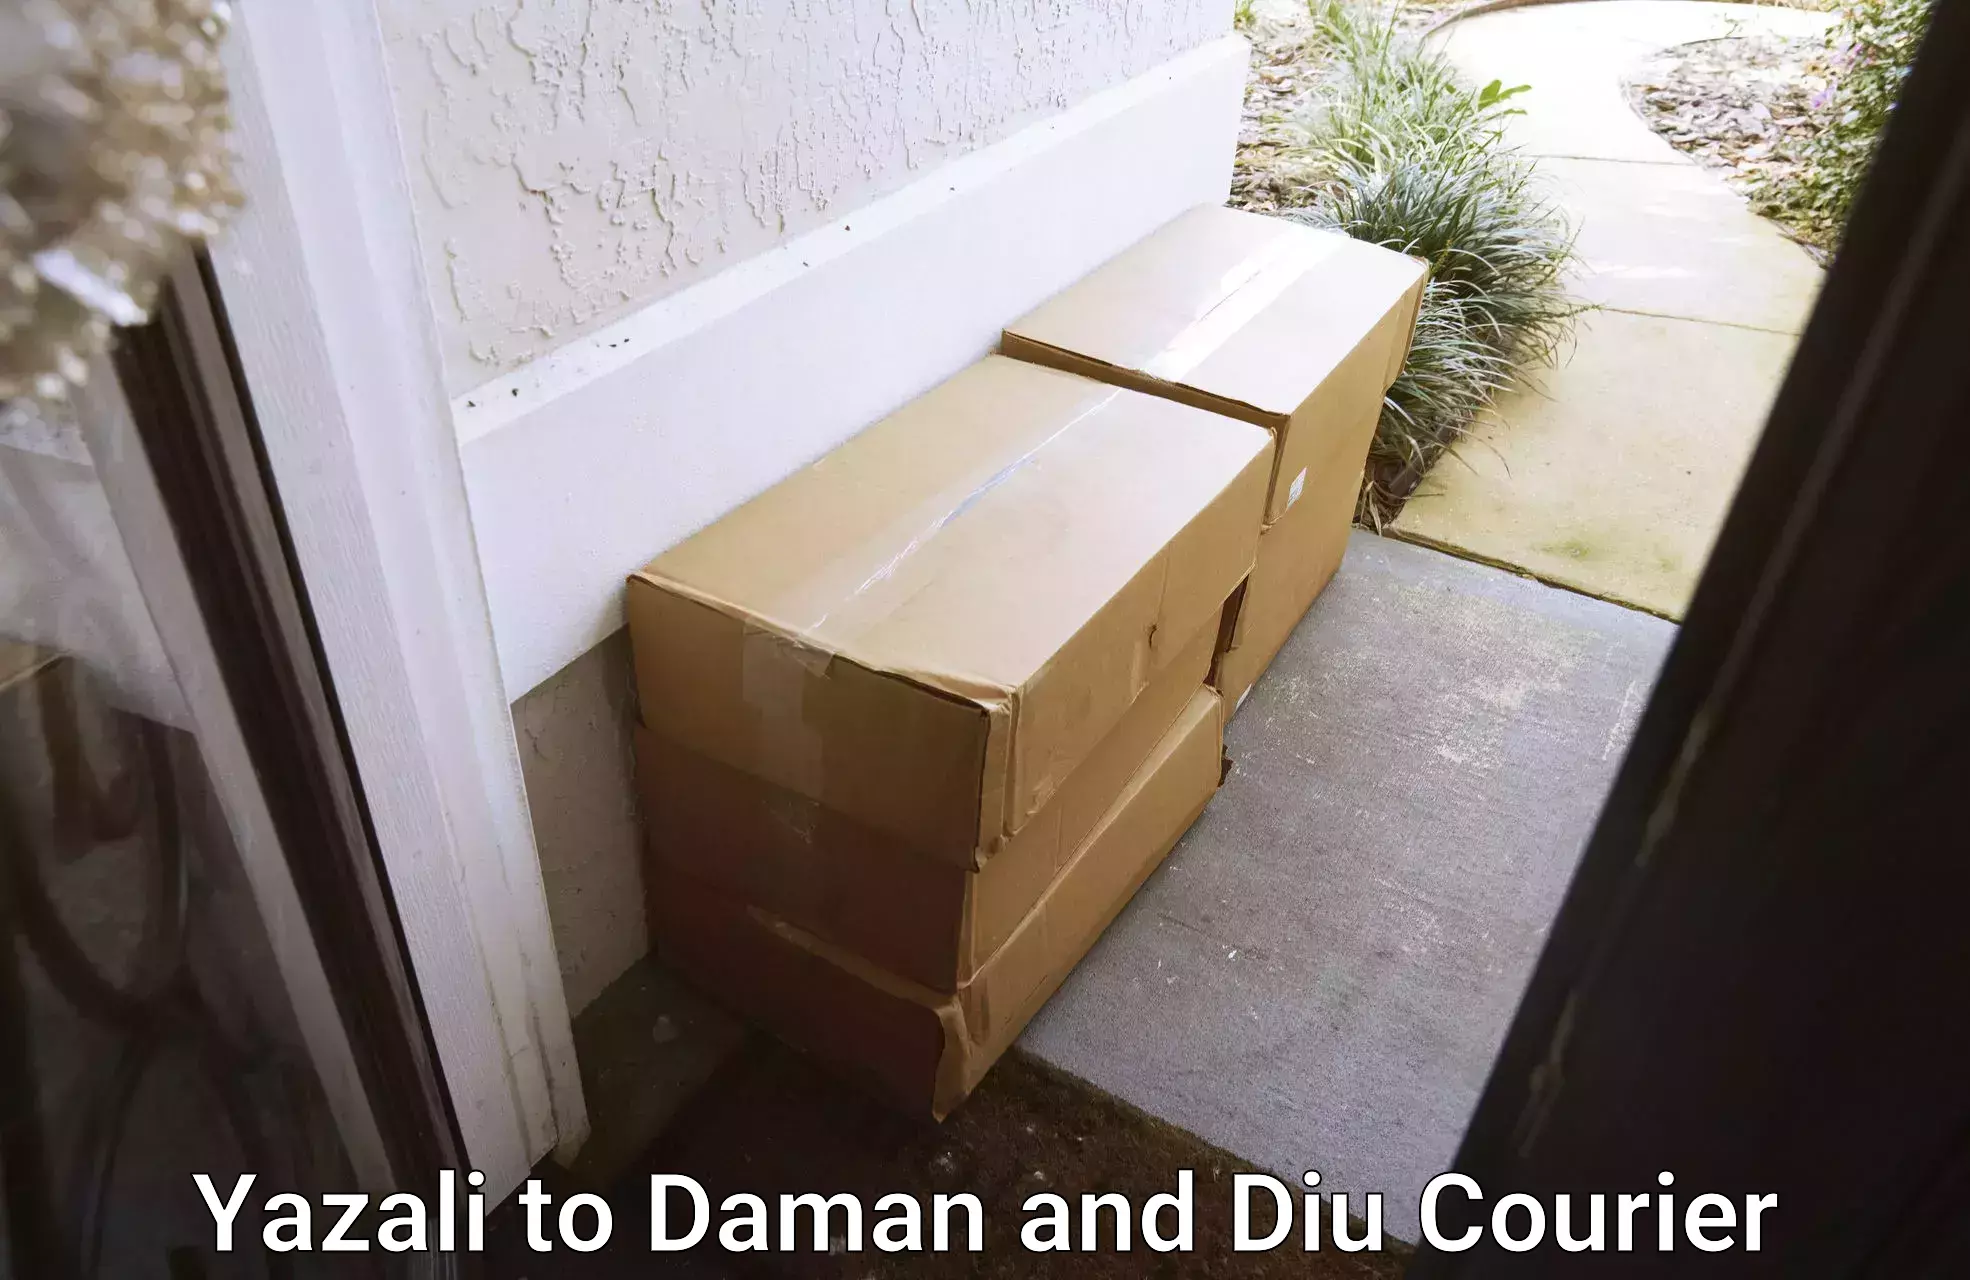 Courier service comparison Yazali to Daman and Diu